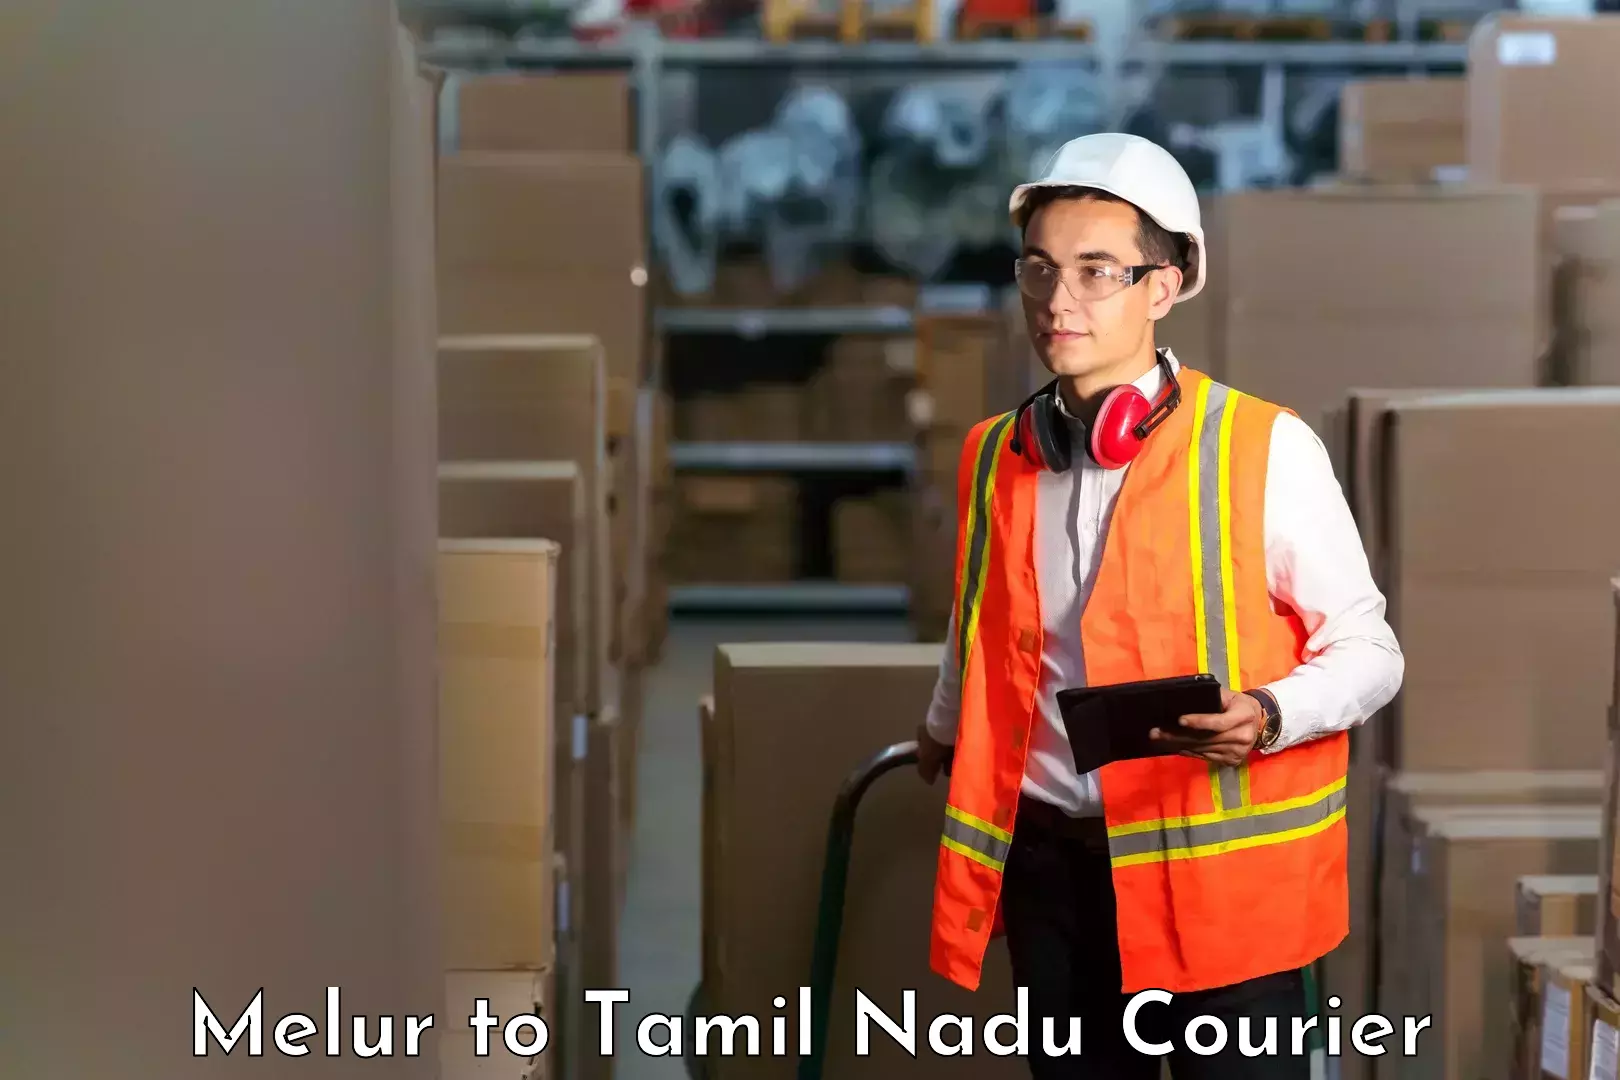 Professional courier handling Melur to Kalpakkam